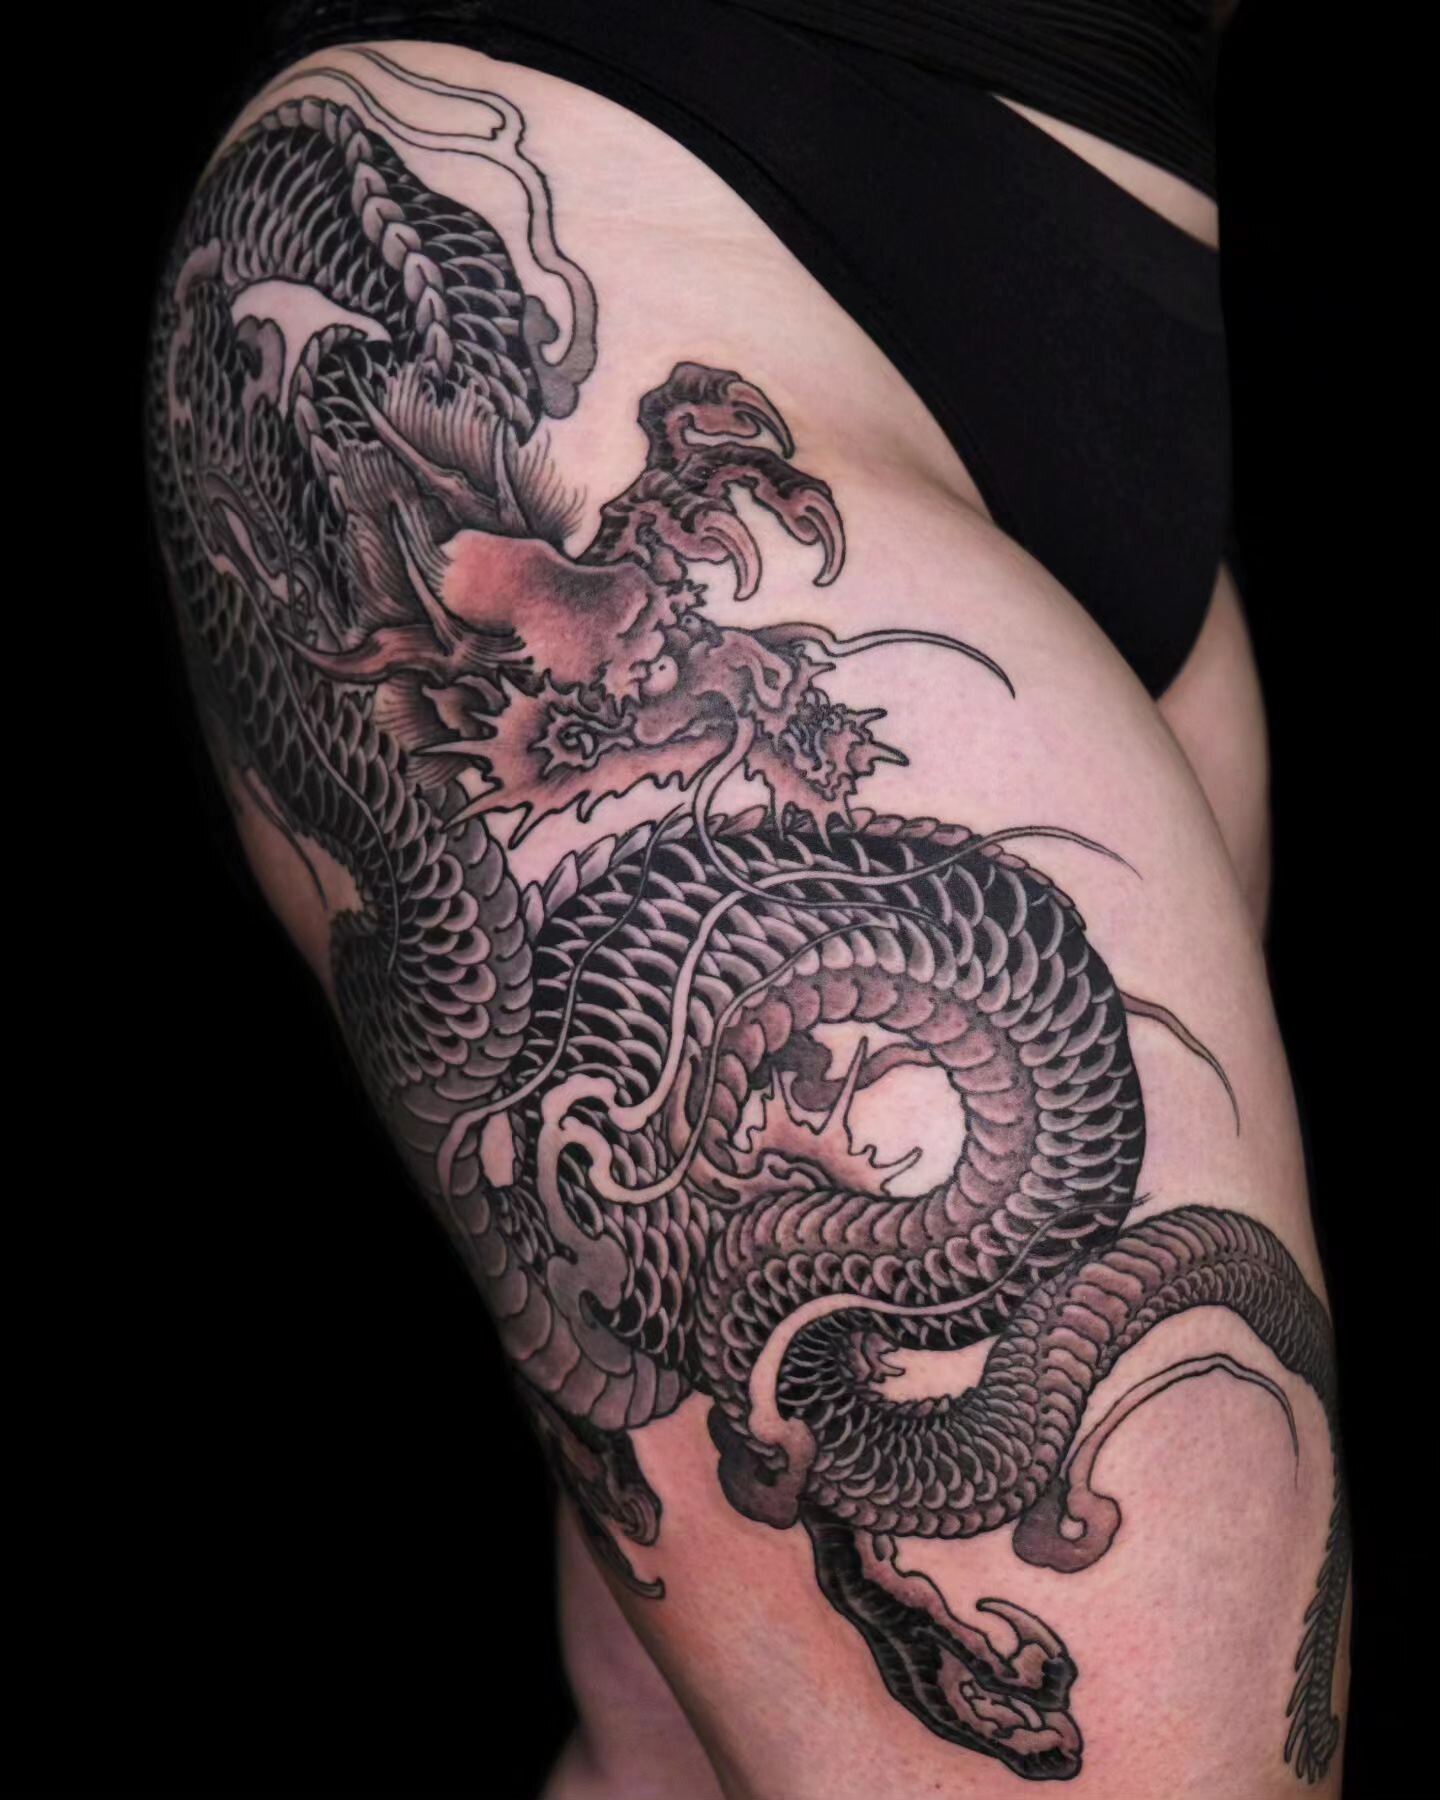 A black and gray dragon on the thigh done by Katsu @wildmonkey_katsu 

#balckandgreytattoos #blackdragon #japanesedragon #tattooedgirls #japanesetattoo #wildmonkeytattoo #gouda #netherlands #thightattoo